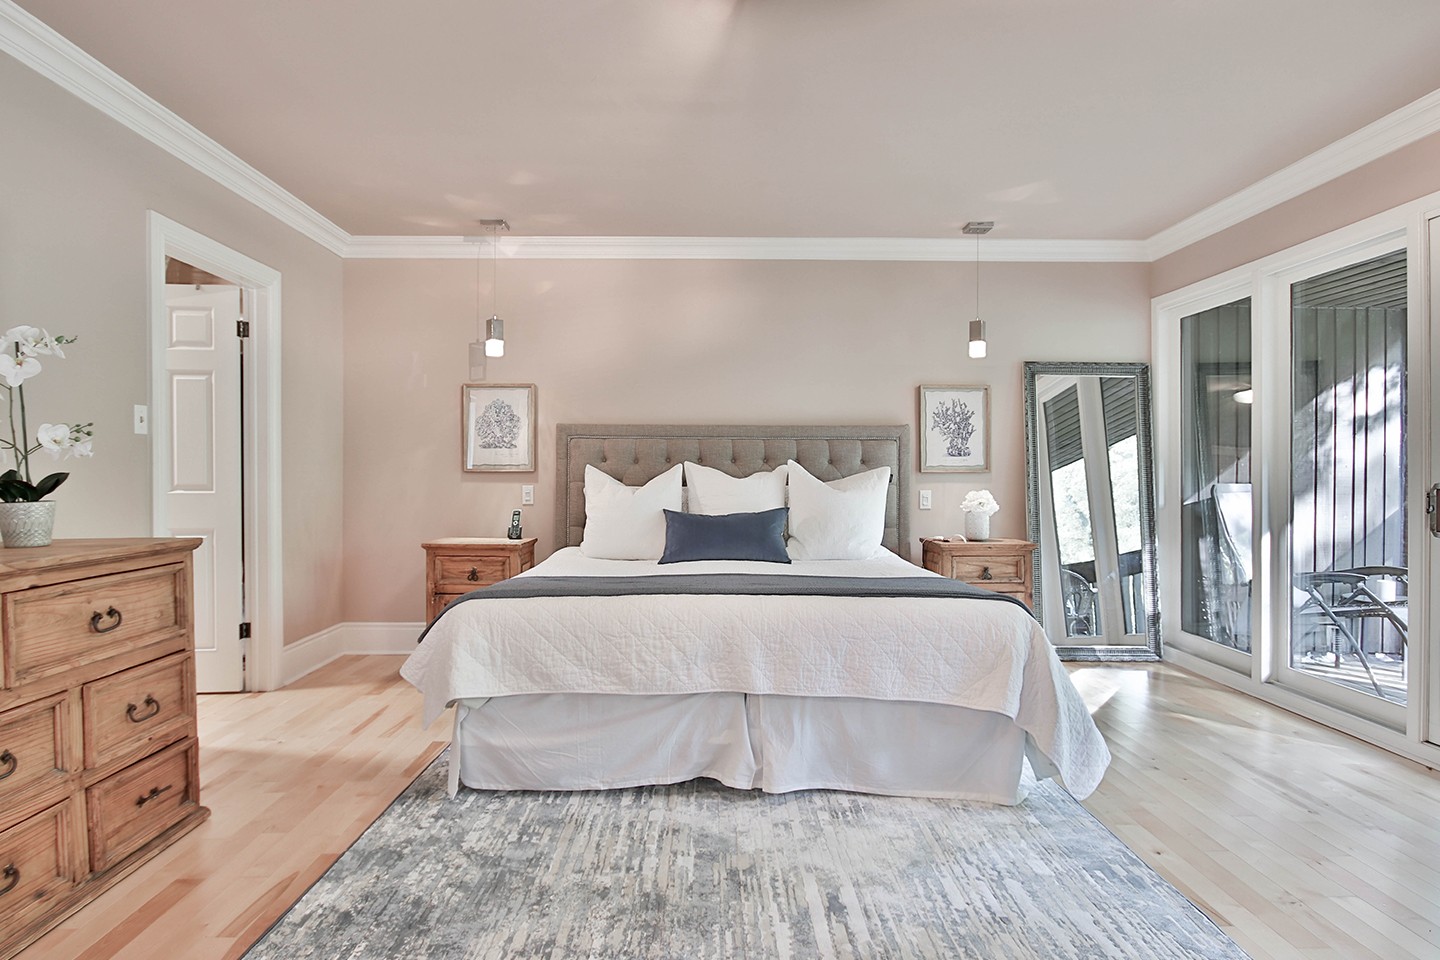 10 Romantic Bedroom Decor Ideas for Couples